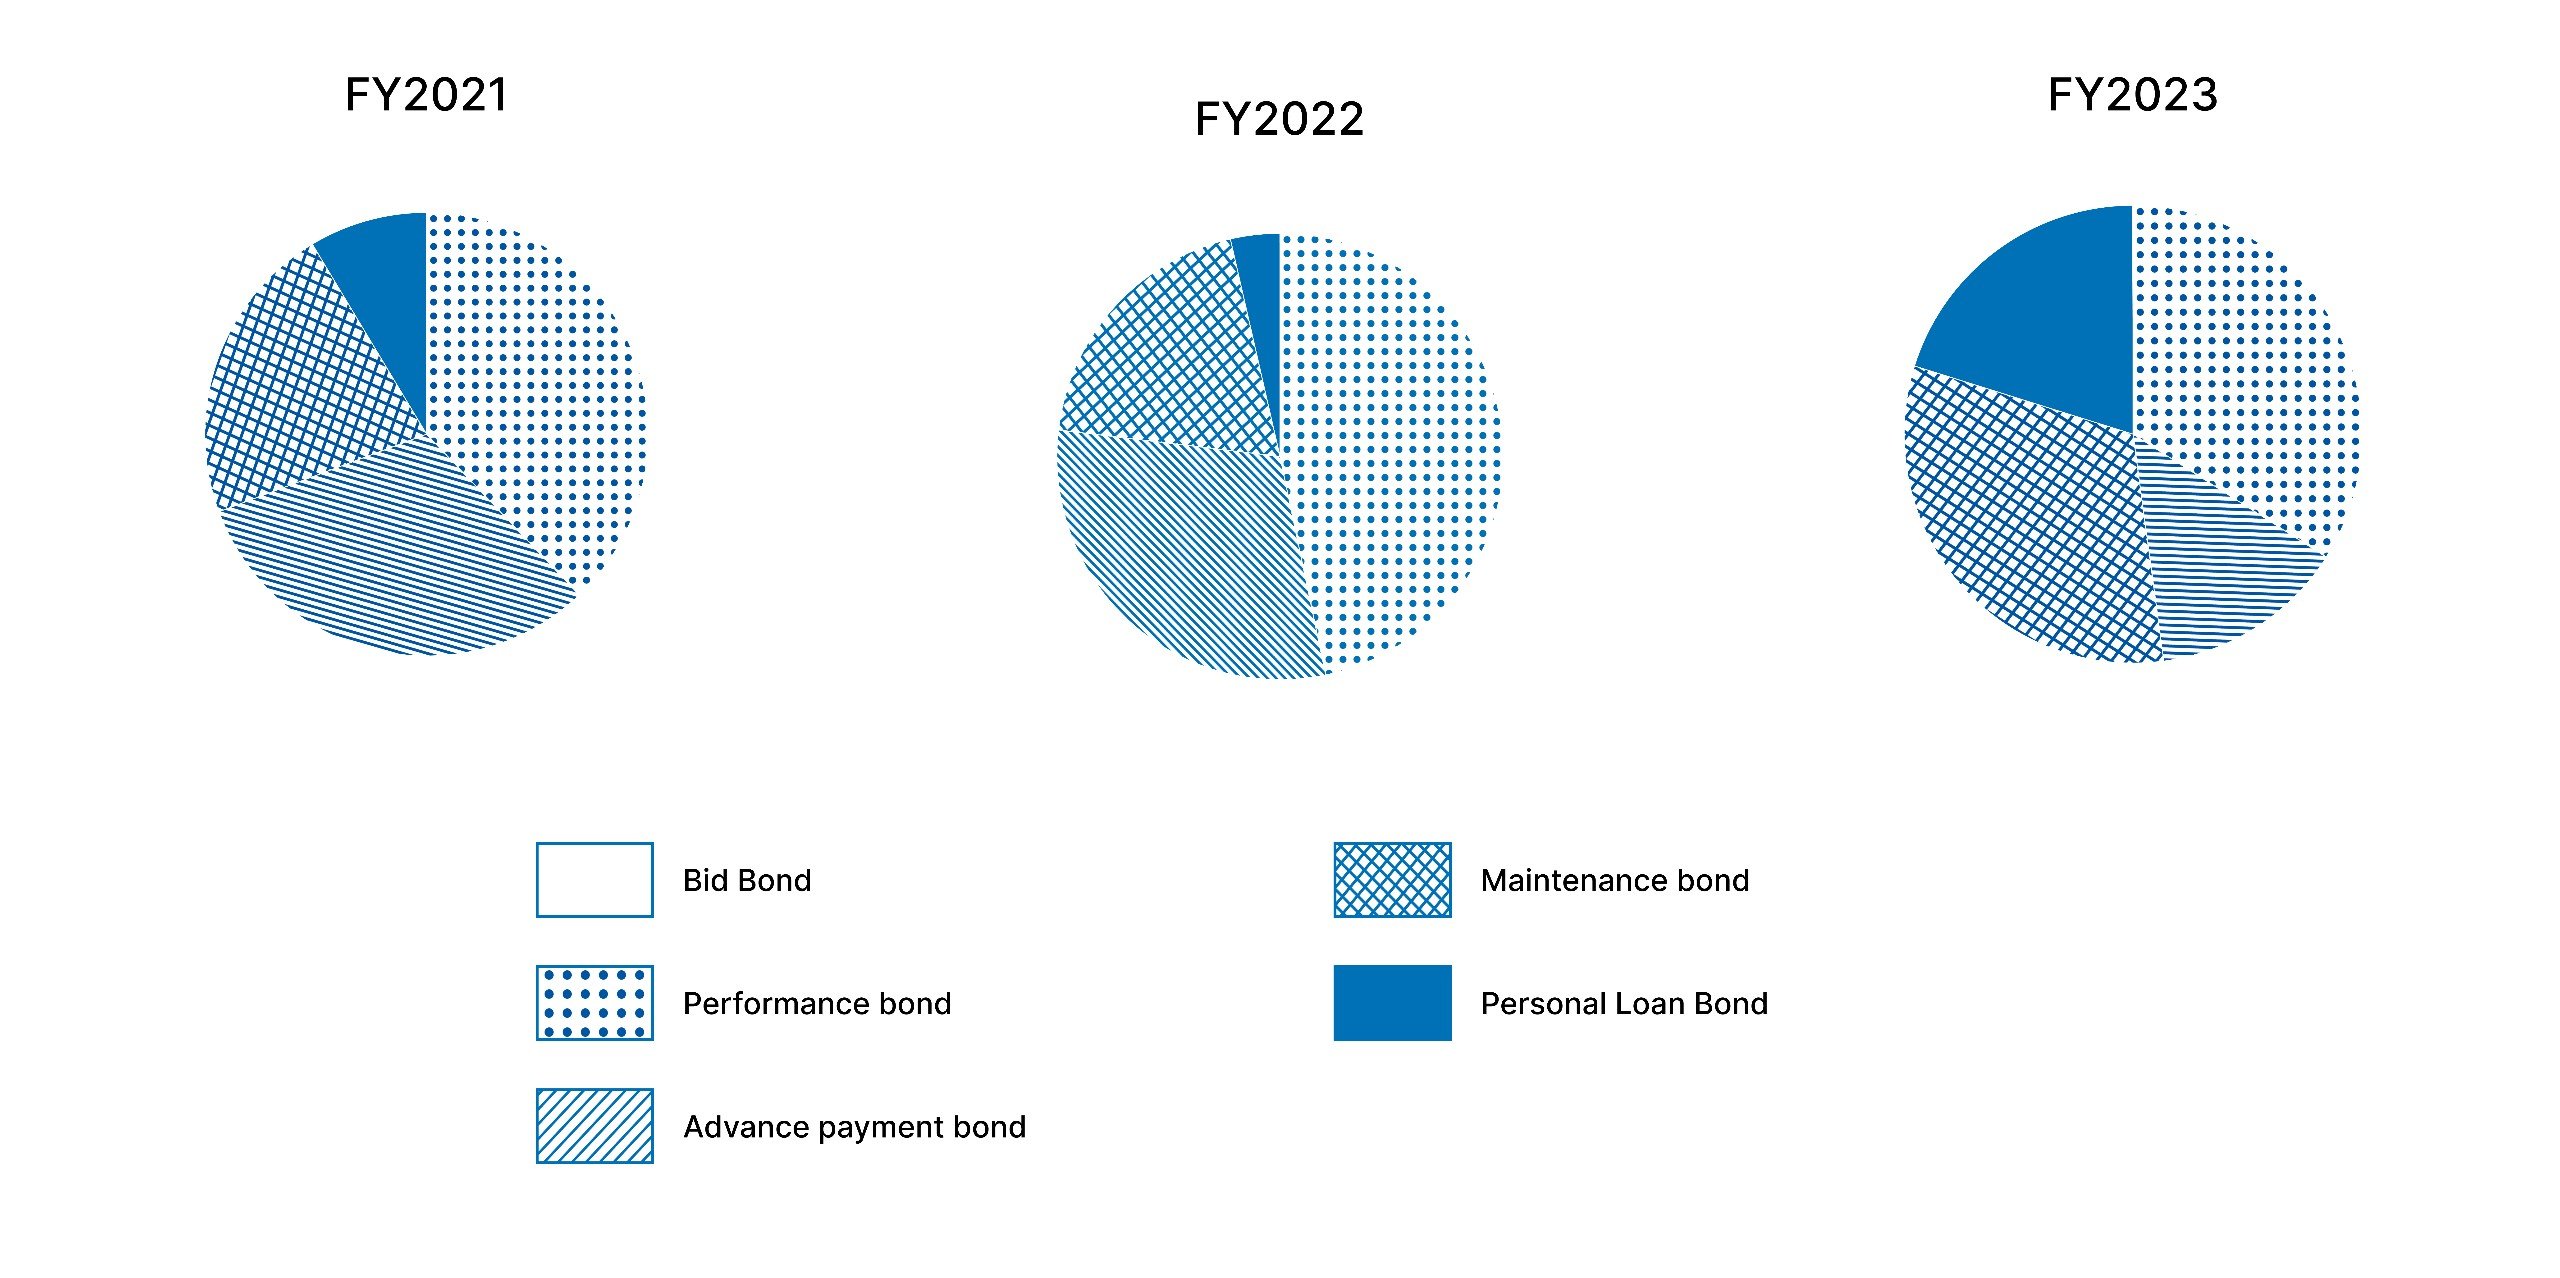 FY2021, bid bond : 0.02%, performance bond : 37.91%, advance payment bond : 31.45%, maintenance bond : 22.06%, personal loan bond : 8.56%, FY2022, bid bond : 0.03%, performance bond : 46.70%, advance payment bond : 30.3%, maintenance bond : 19.45%, personal loan bond : 3.51%, FY2023, bid bond : 0.07%, performance bond : 34.01%, advance payment bond : 13.79%, maintenance bond : 32.01%, personal loan bond : 20.13%